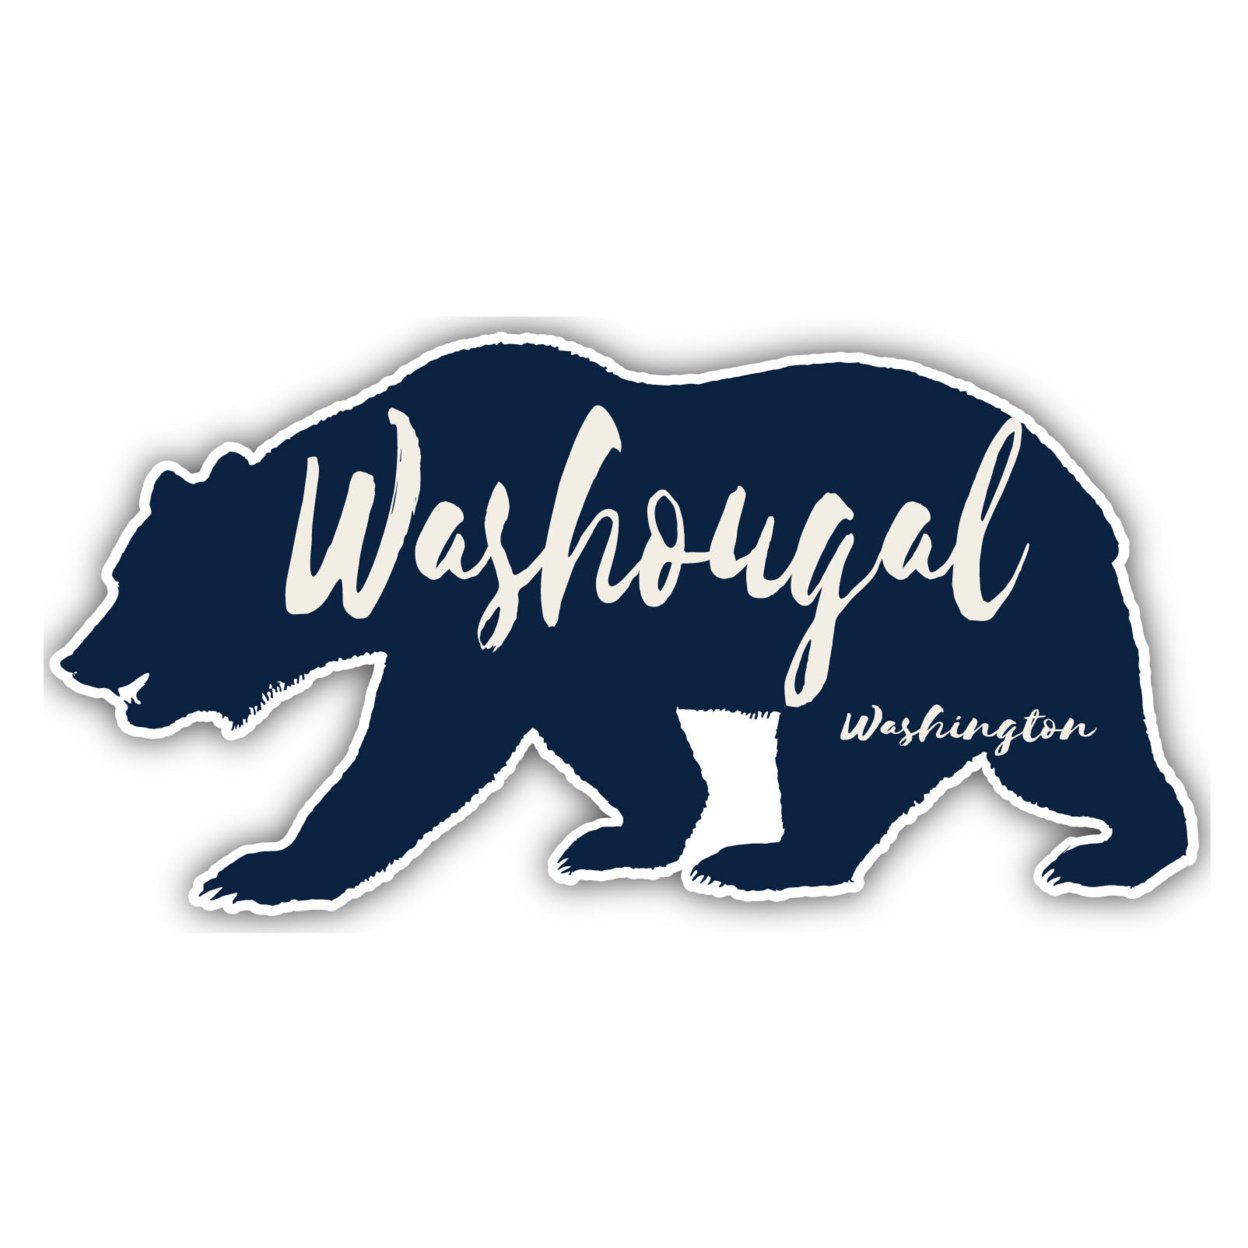 Washougal Washington Souvenir Decorative Stickers (Choose Theme And Size) - Single Unit, 2-Inch, Bear